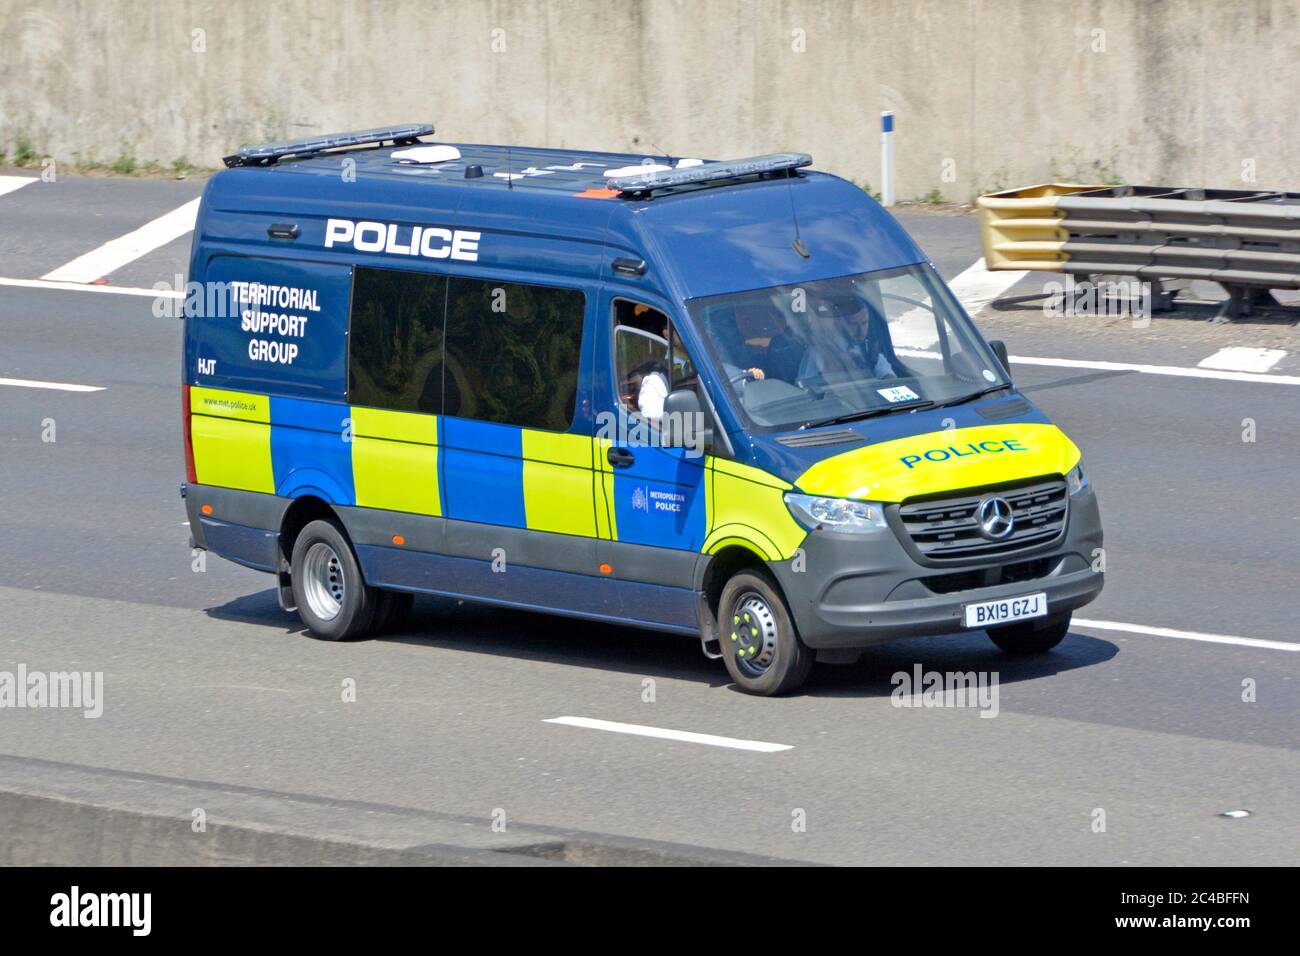 Met police force London Metropolitan Police Territorial Support Group Mercedes Benz people carrier van & driver in uniform M25 motorway England UK Stock Photo